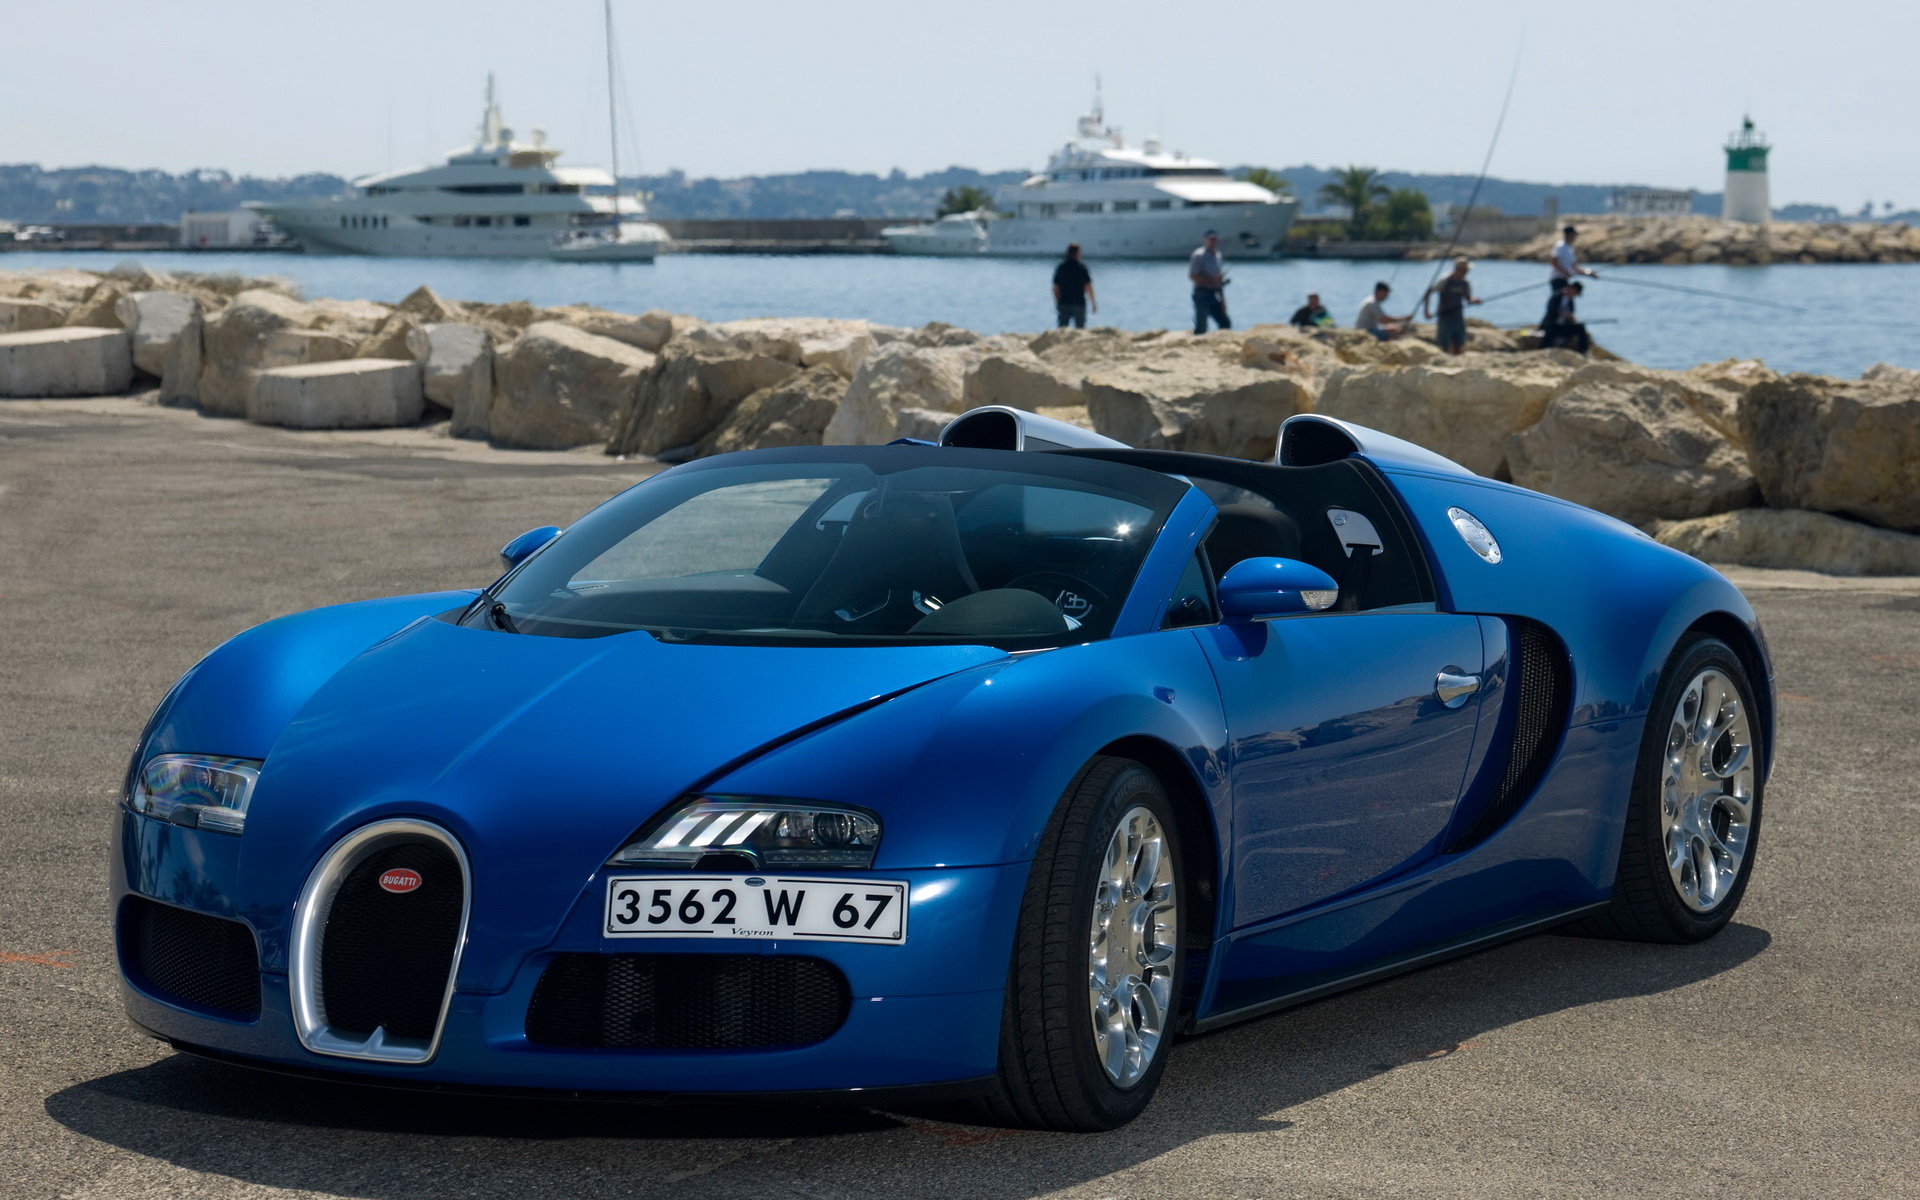 Best Bugatti Veyron background ID:297872 for High Resolution hd 1920x1200 PC